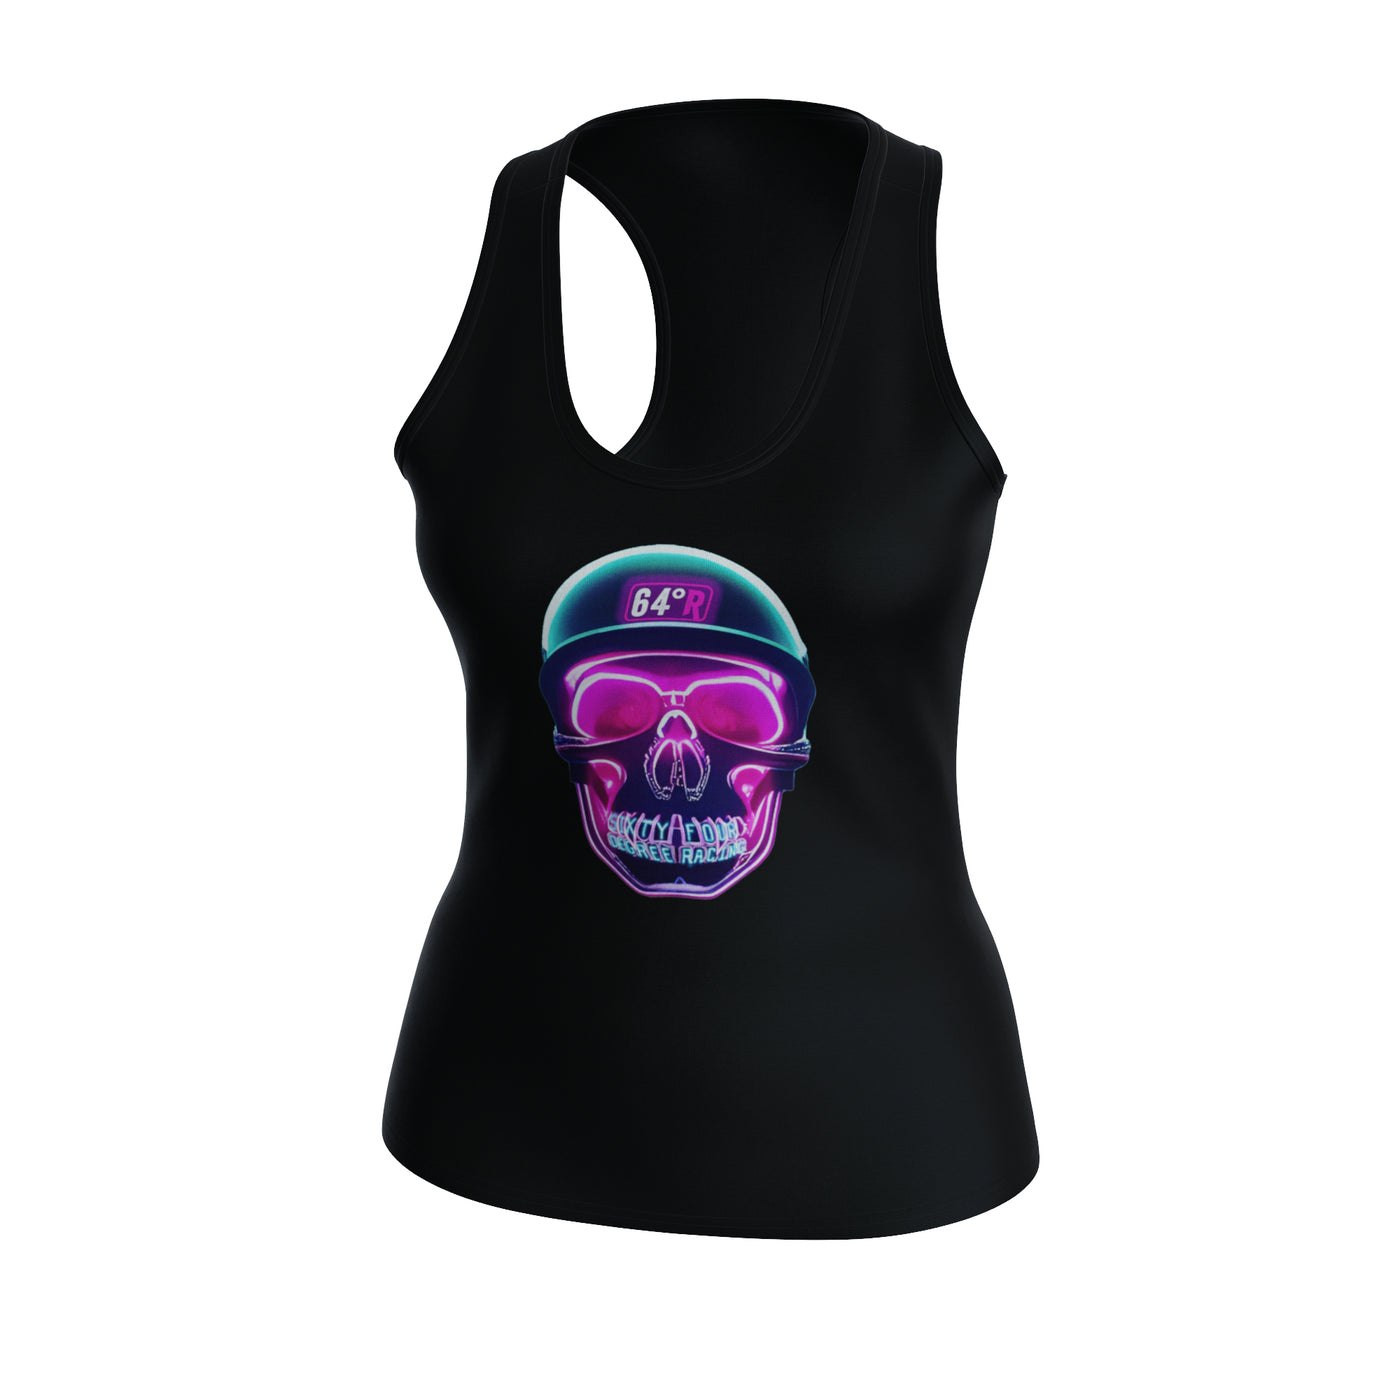 Womens Neon Skull design tank top